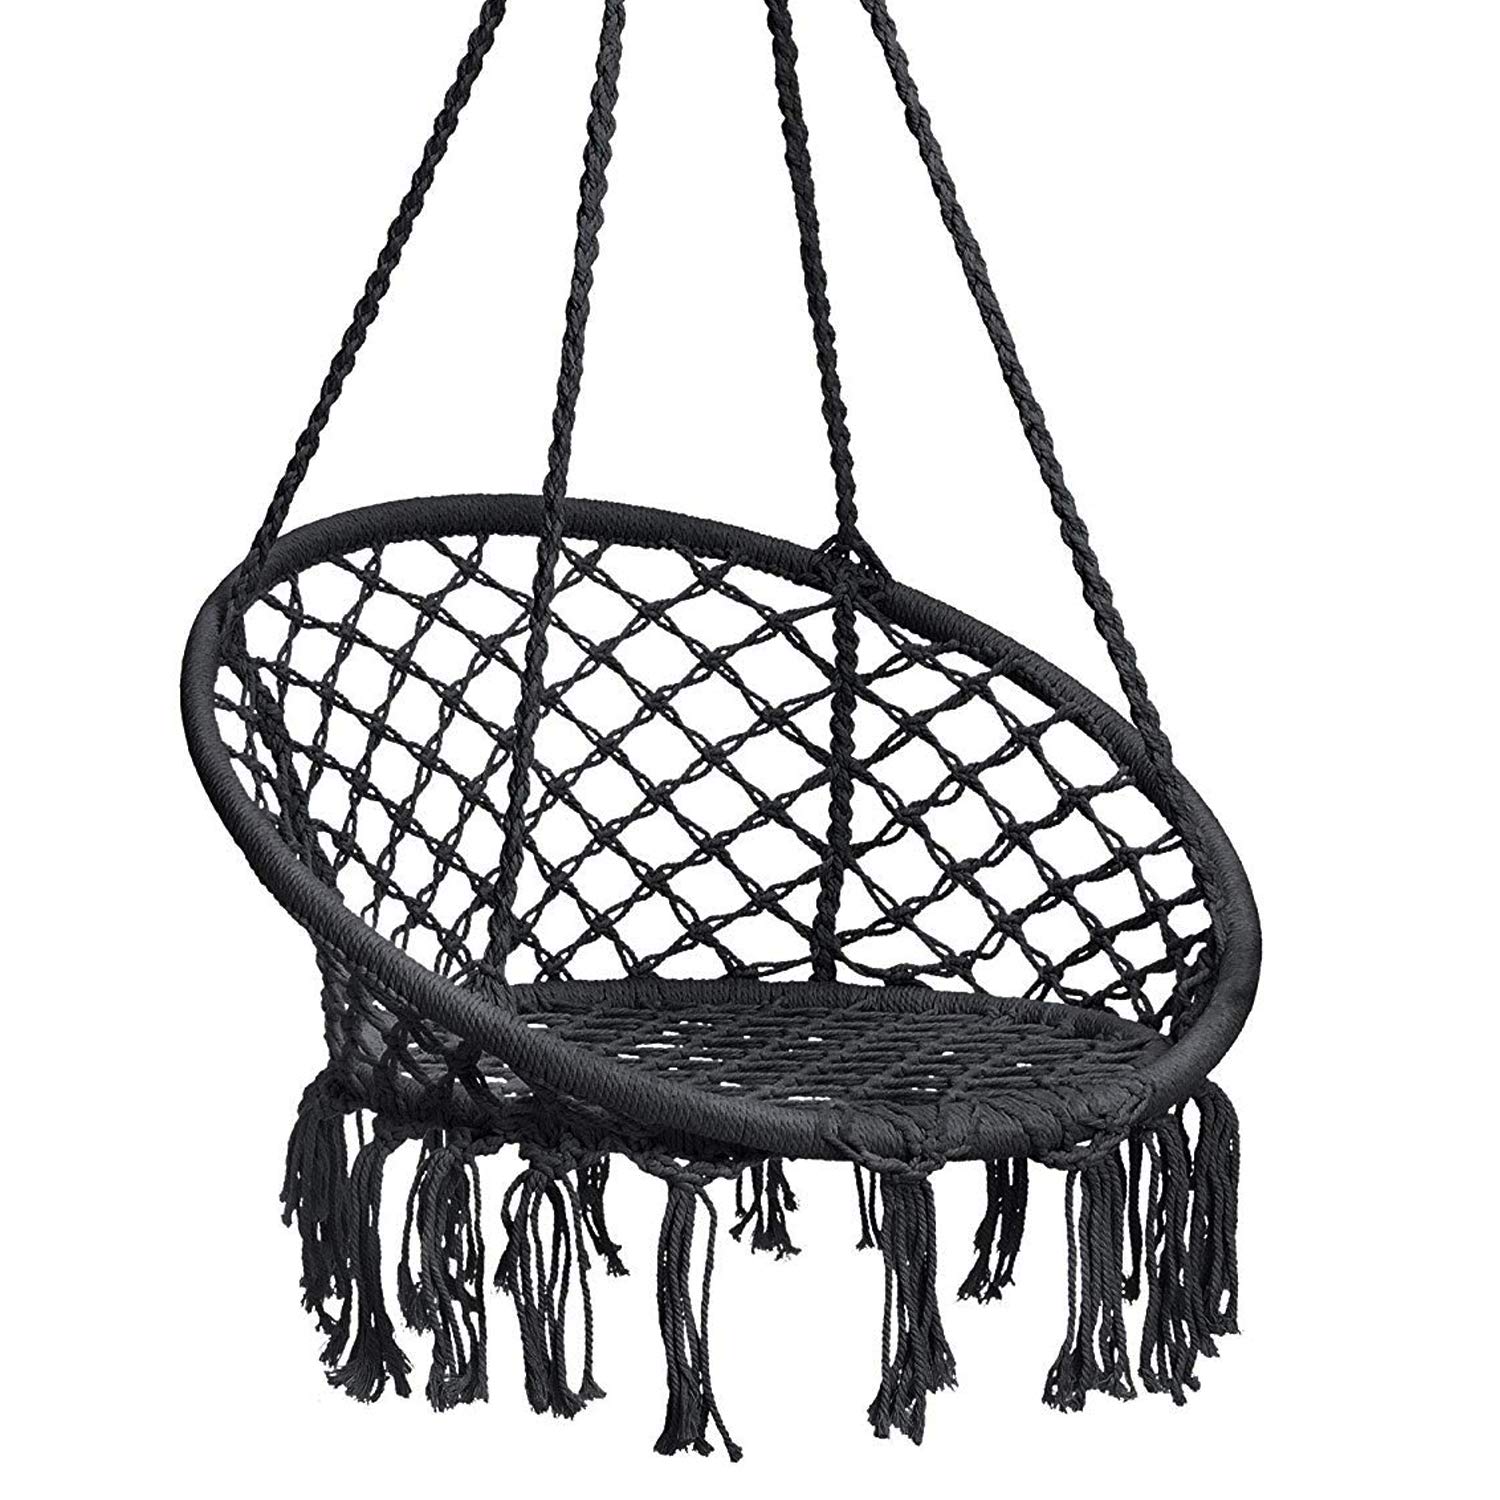 2019 HOT SALES Hammock Hanging Rope Chair